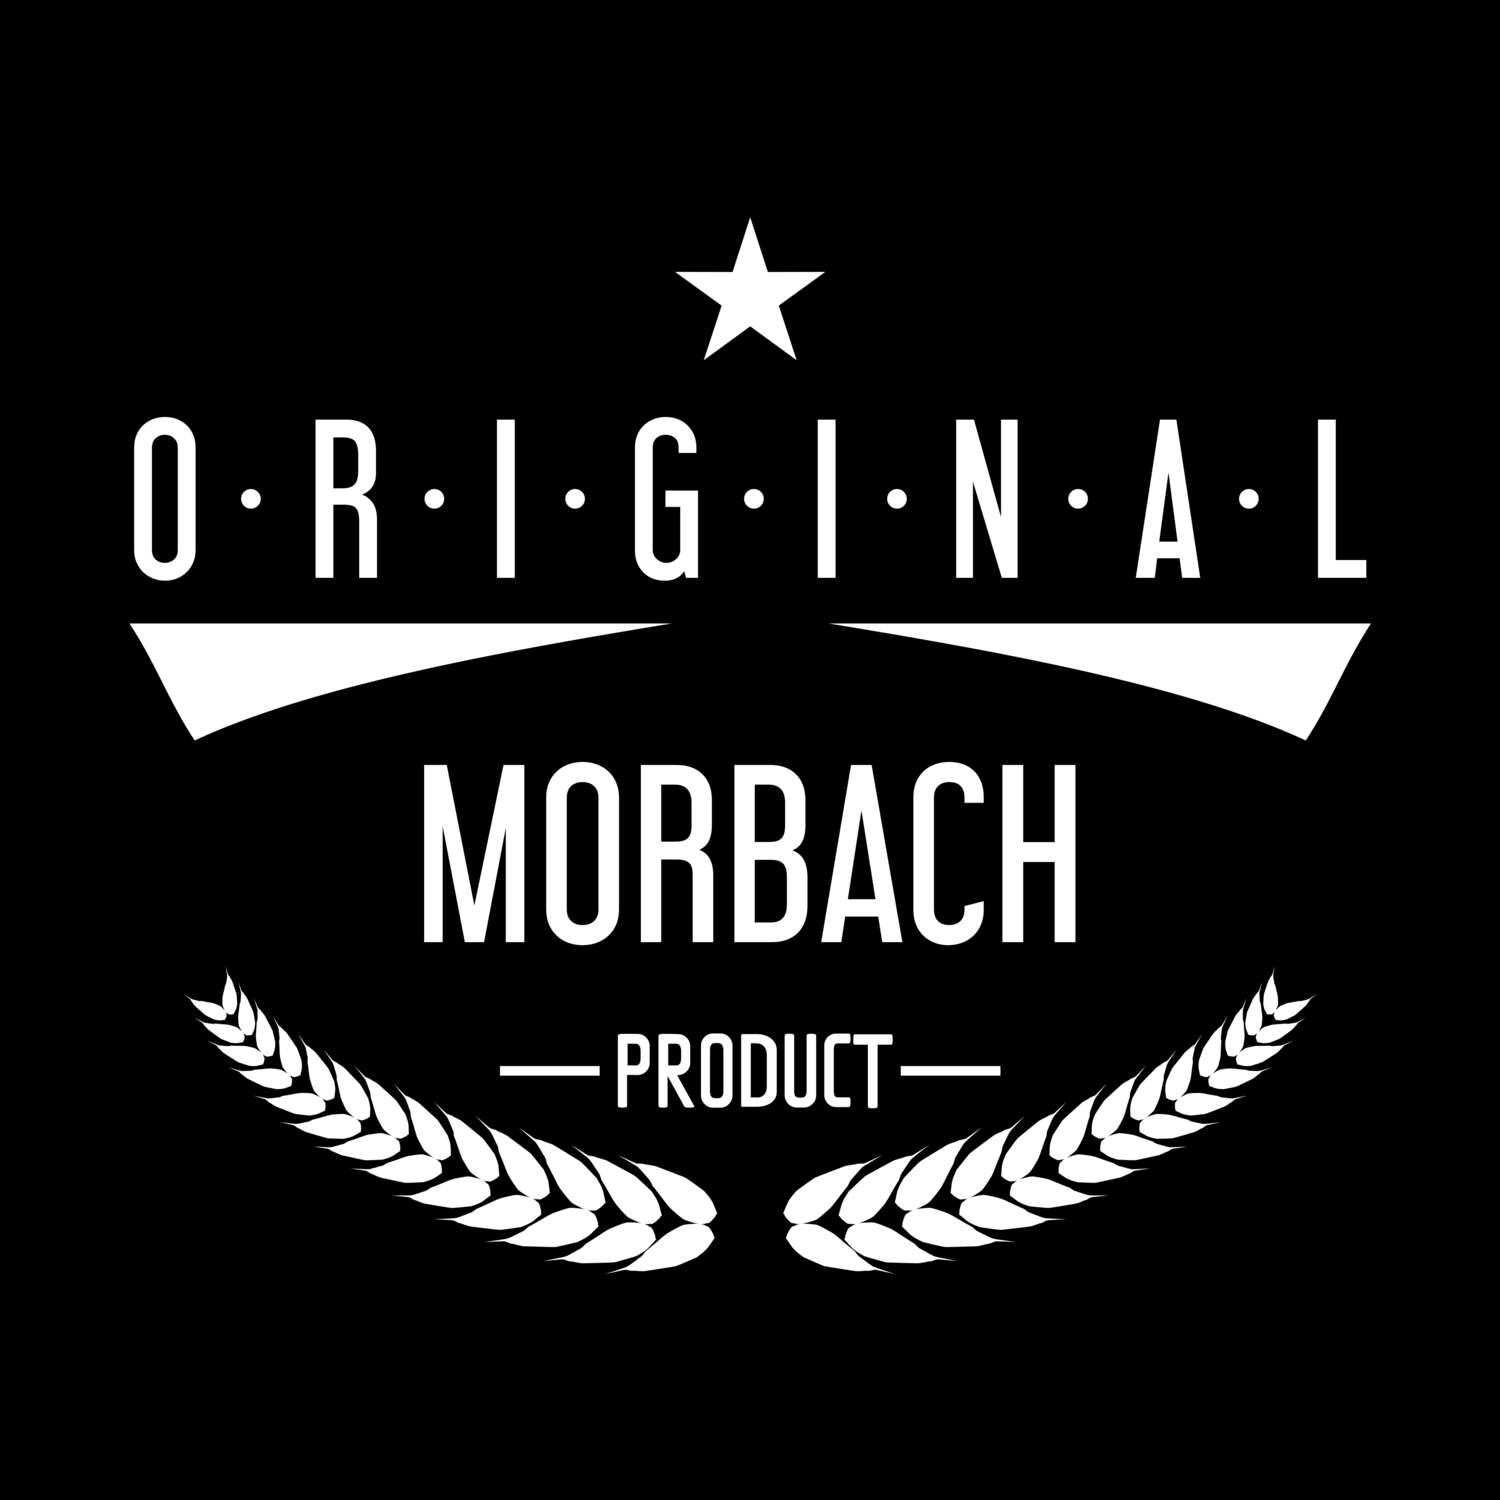 Morbach T-Shirt »Original Product«